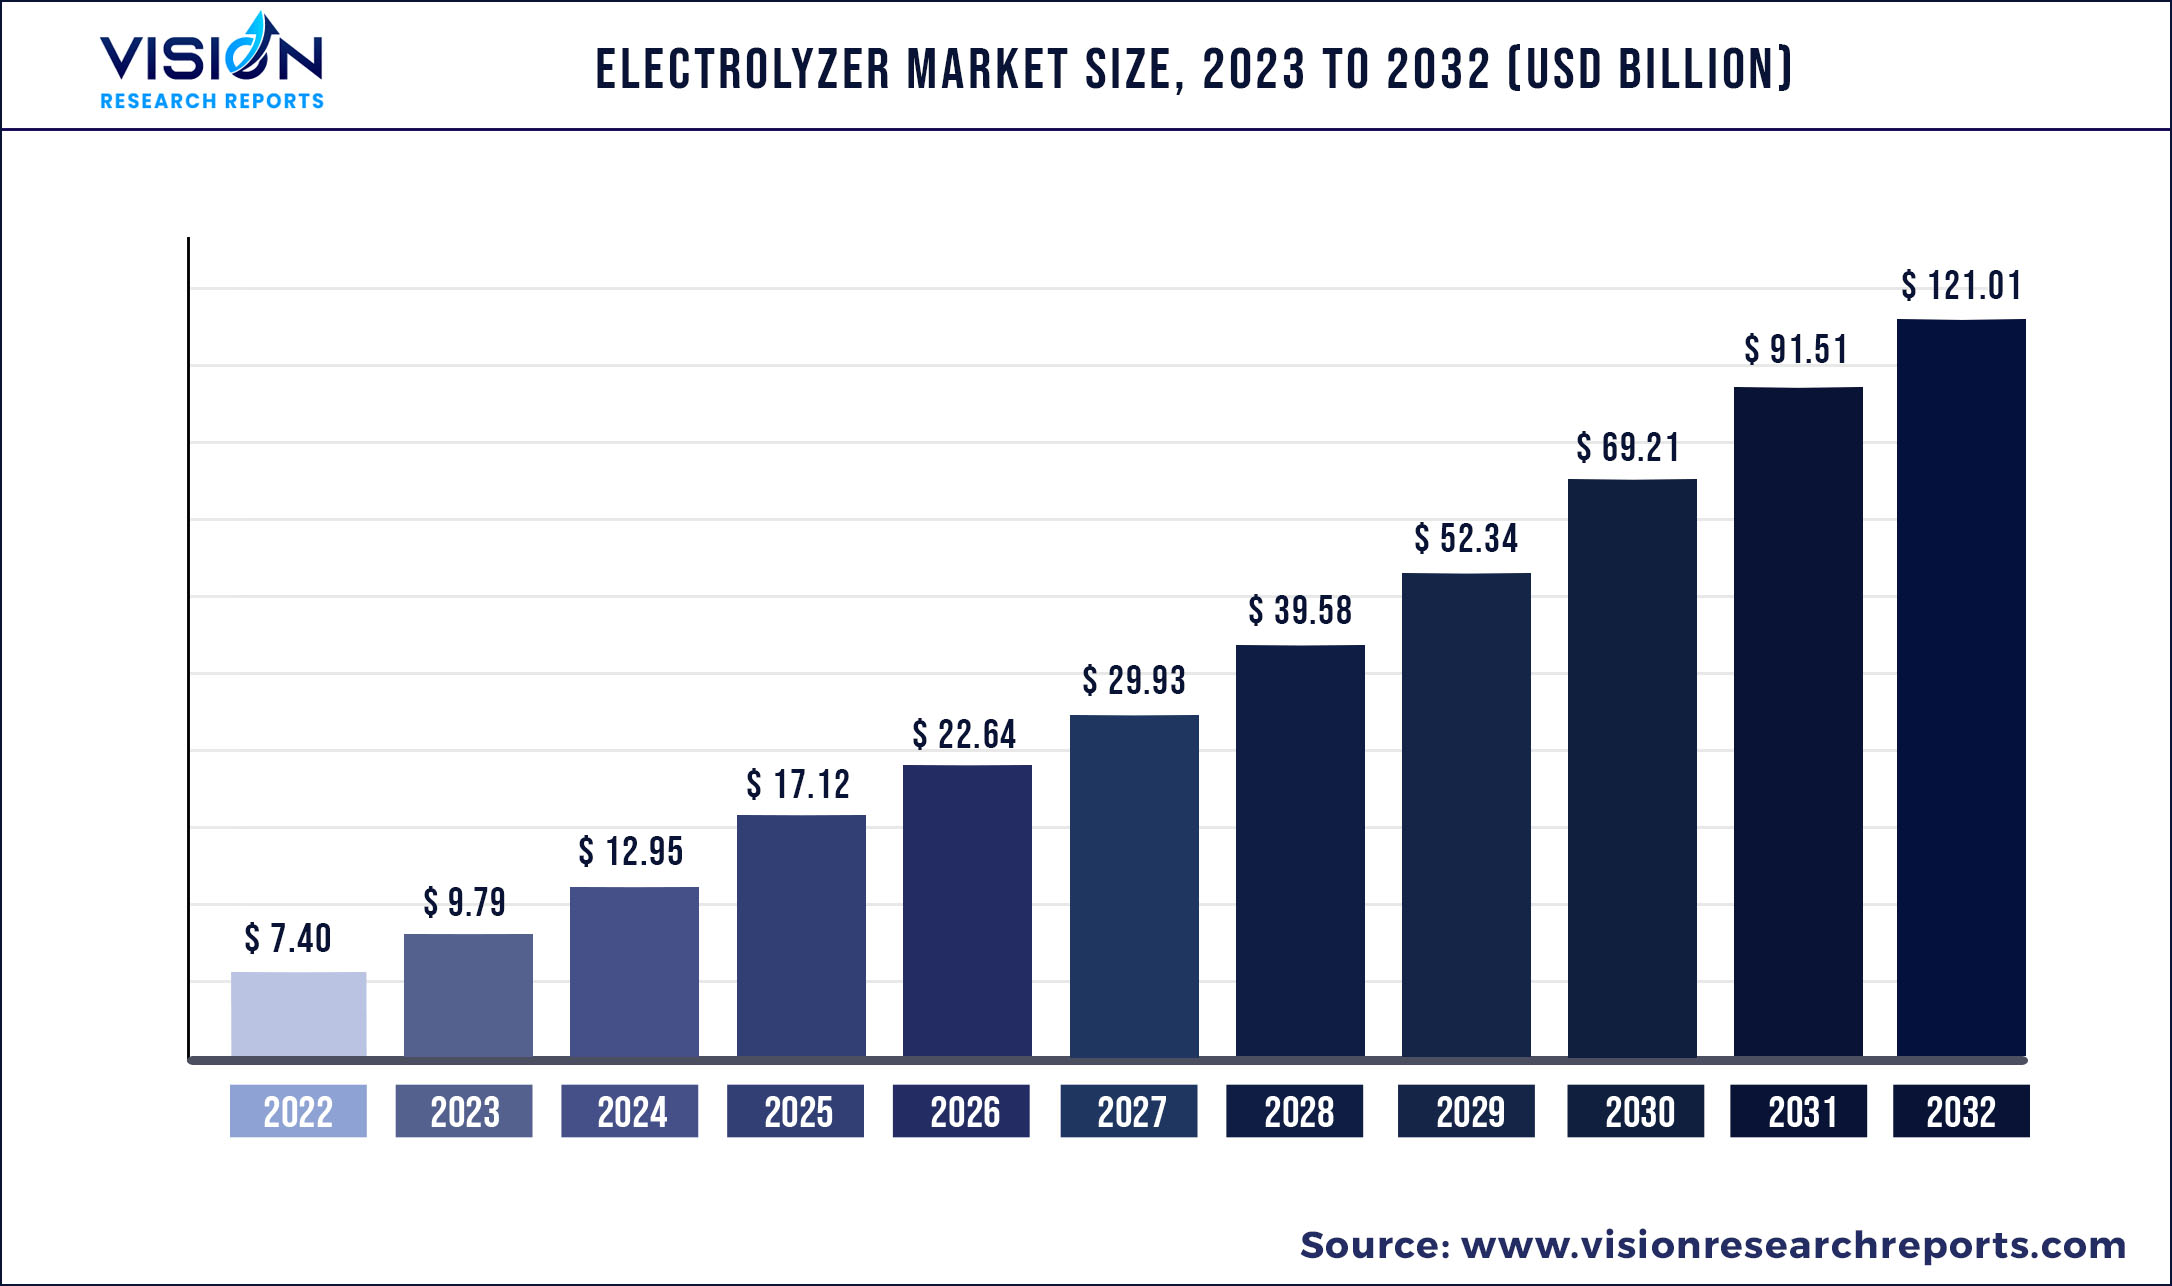 Electrolyzer Market Size 2023 to 2032